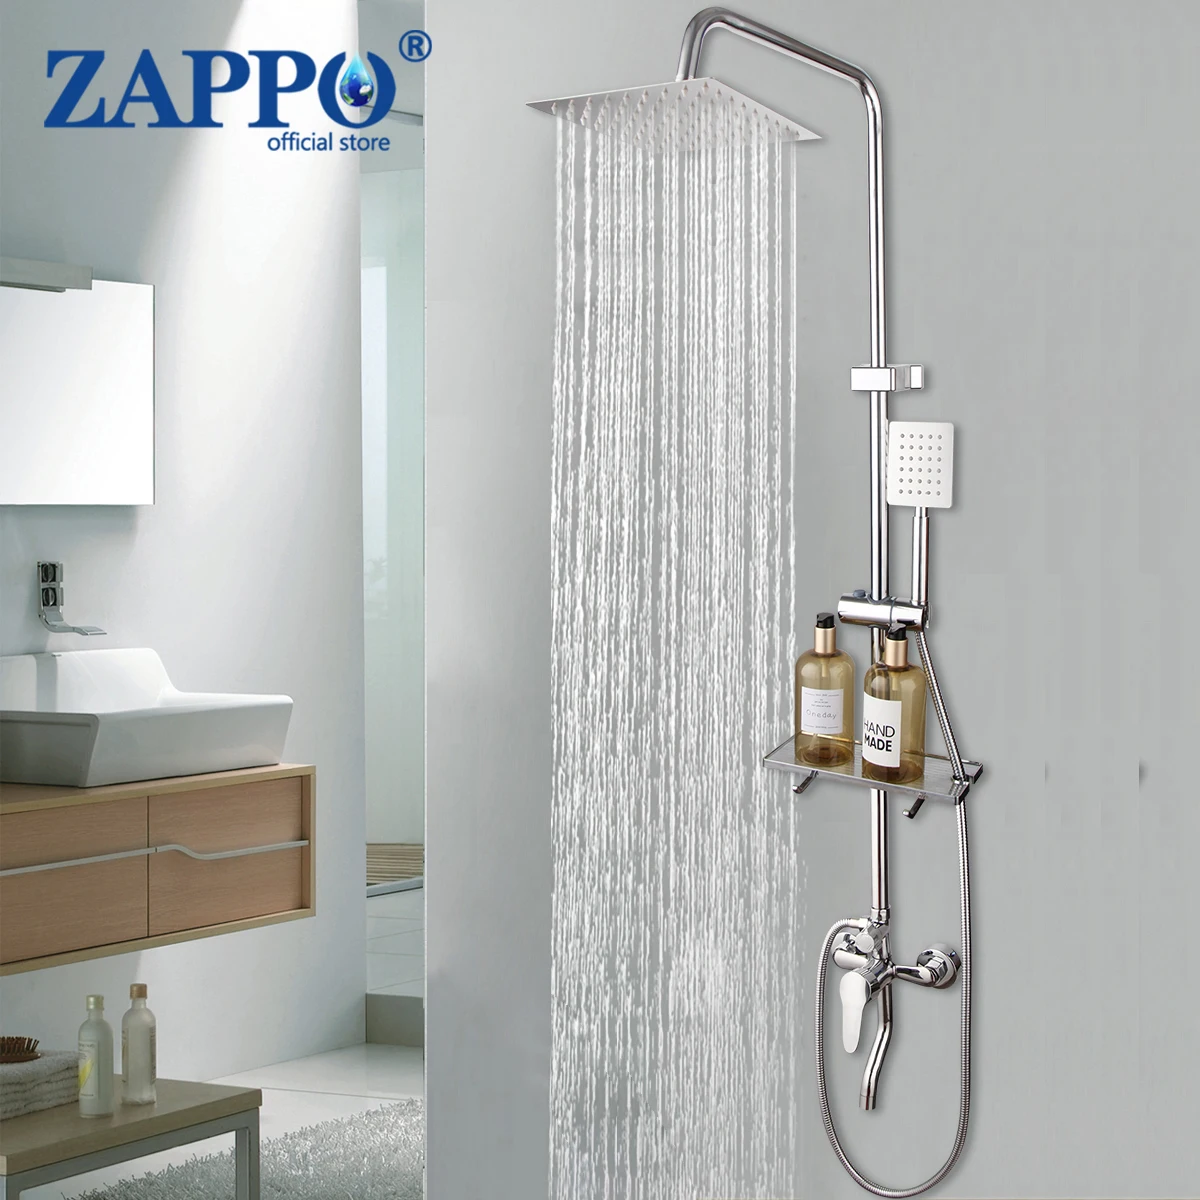 zappo-bathroom-shower-faucet-wall-mount-chrome-polish-rainfall-shower-faucet-set-bathtub-mixer-tap-bathroom-adjust-height